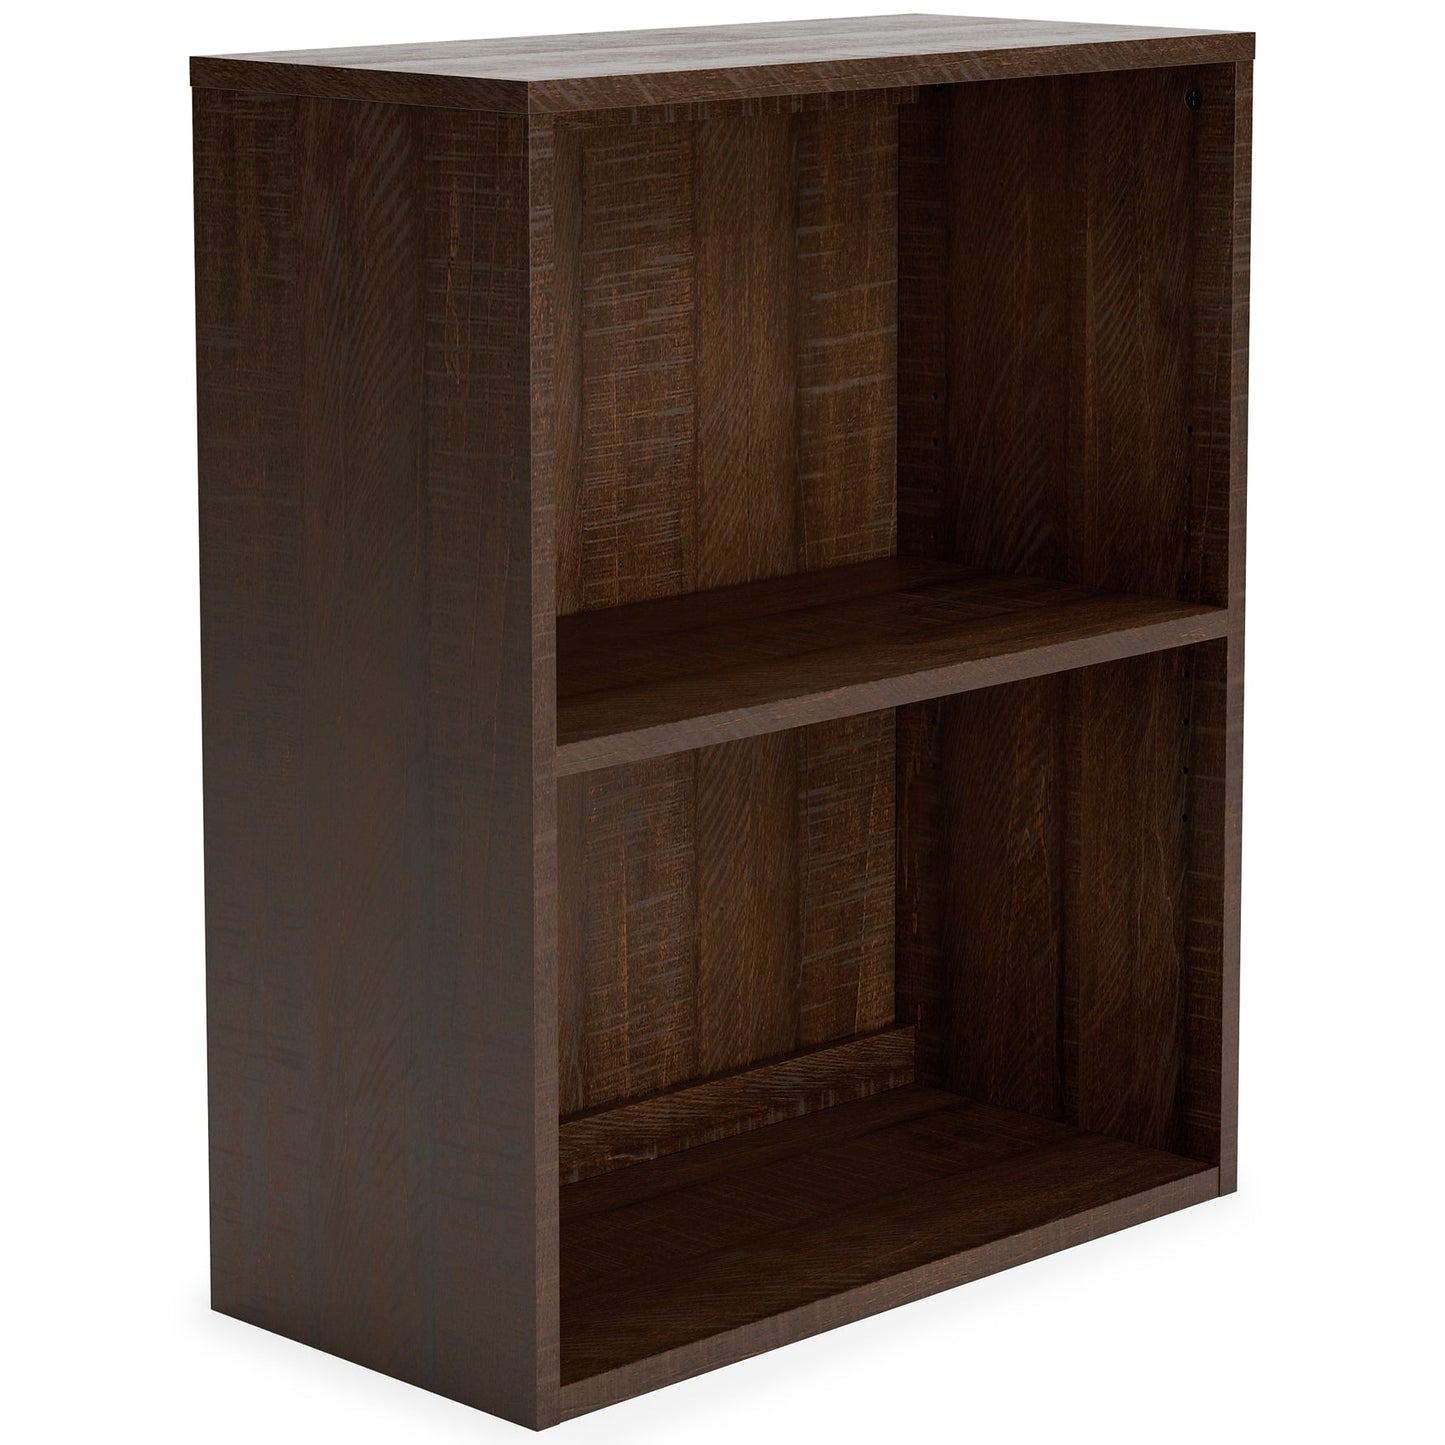 Camiburg Small Bookcase Cloud 9 Mattress & Furniture